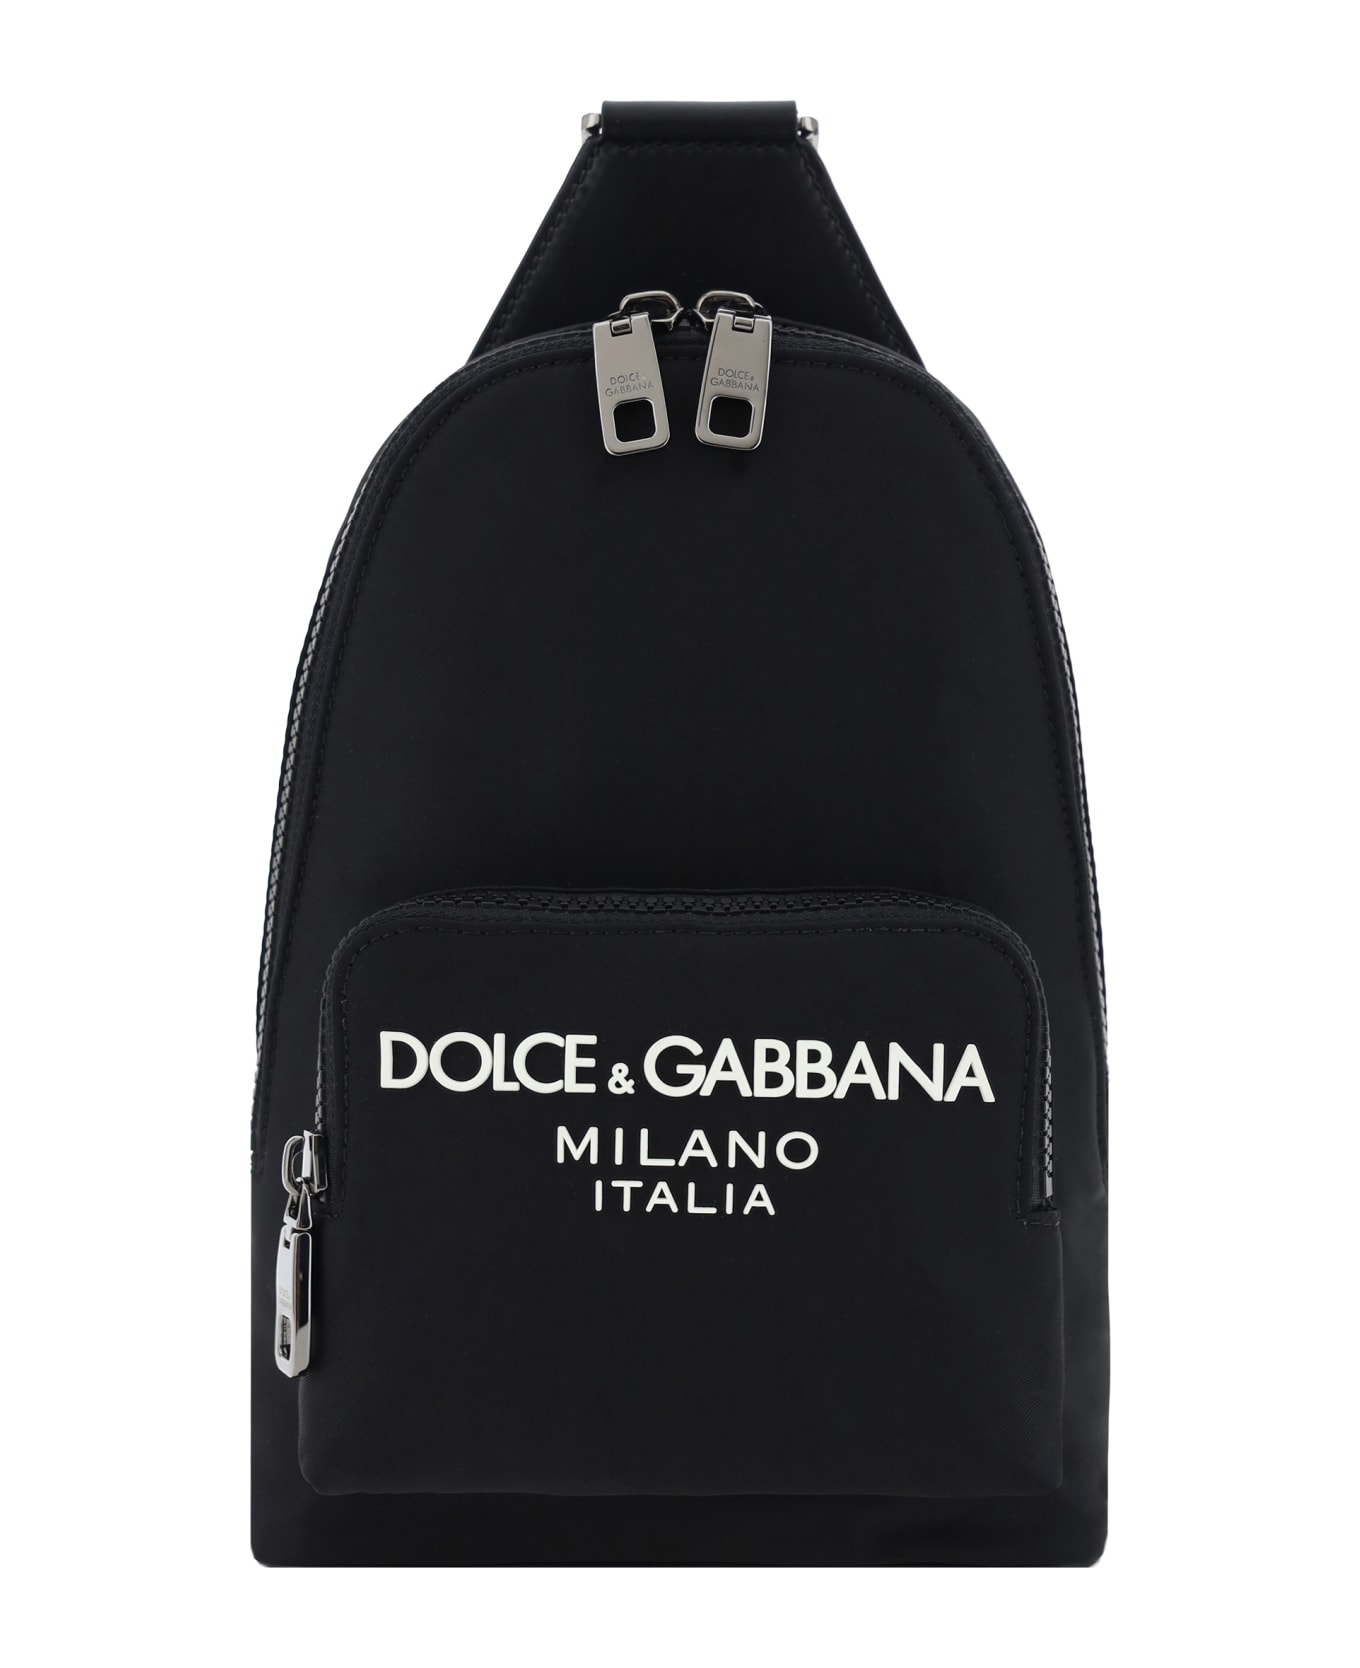 Dolce & Gabbana One-shoulder Backpack - Nero/nero